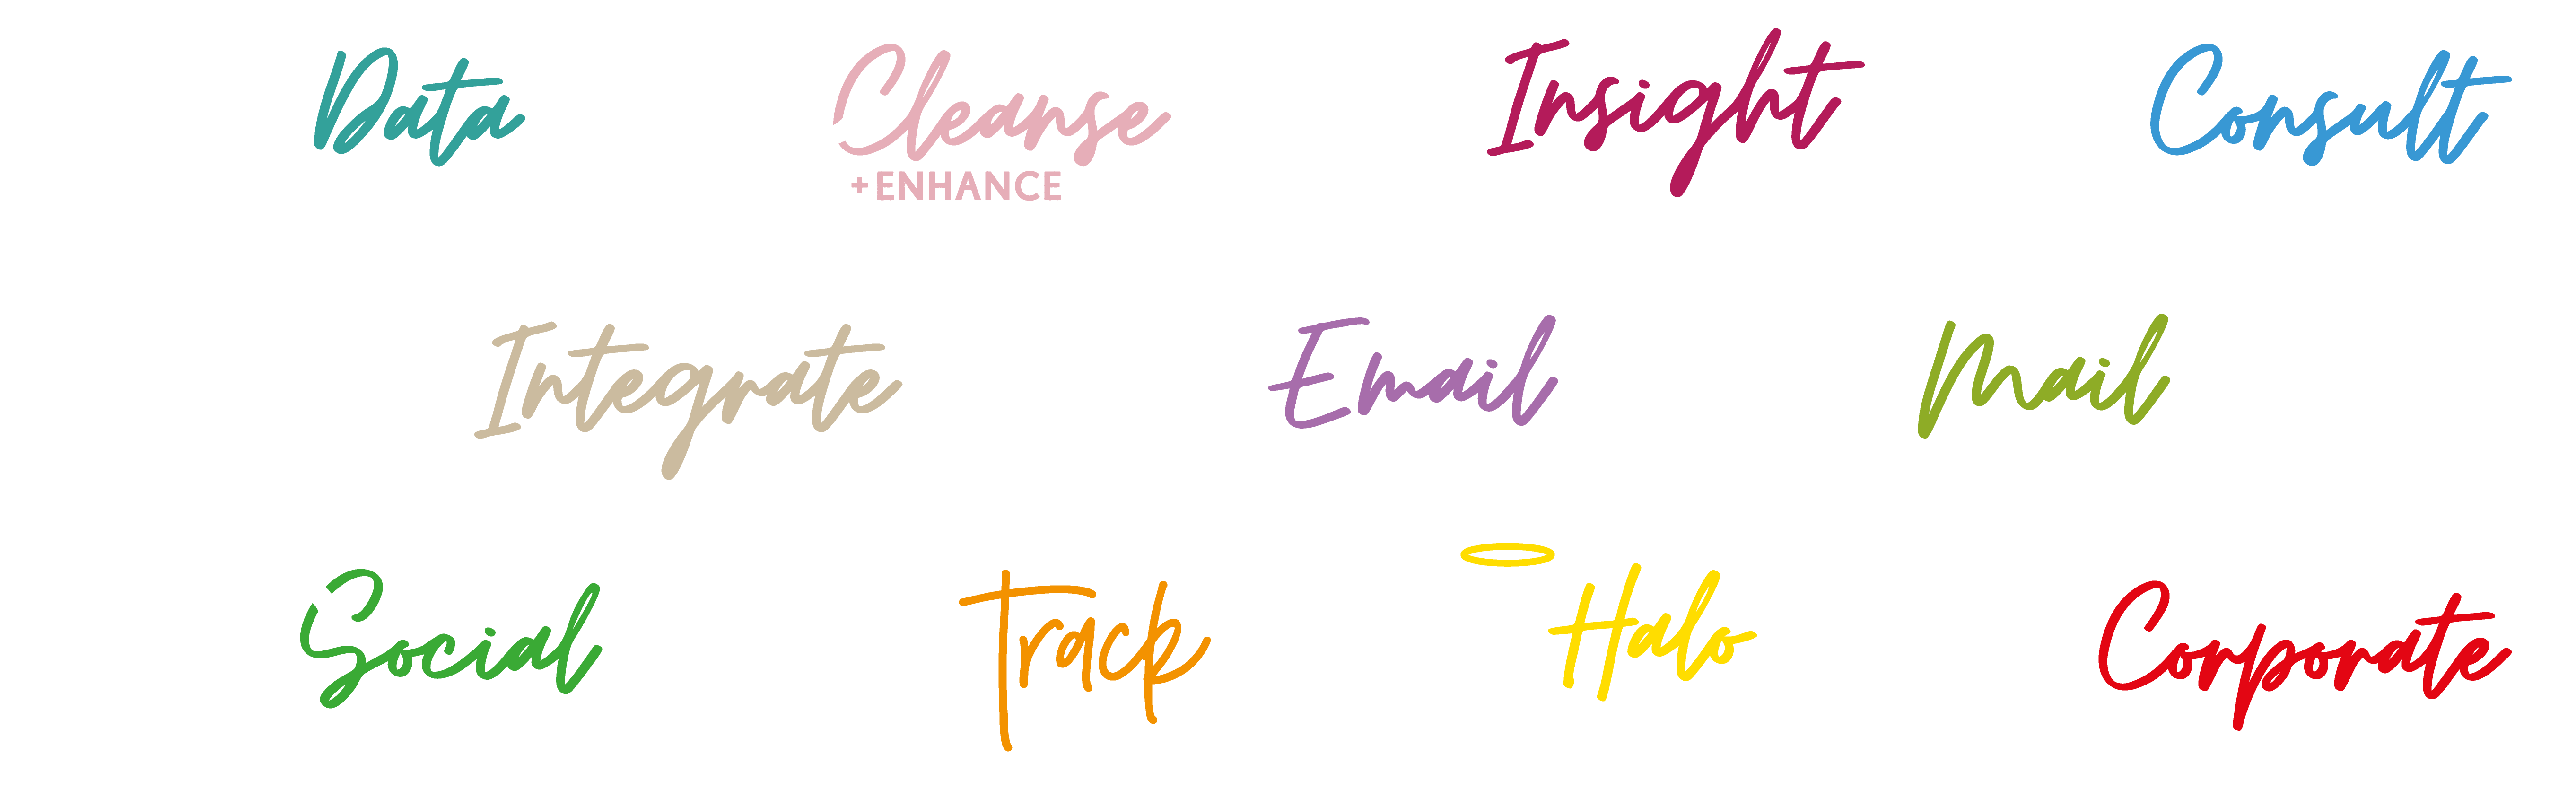 Go Engage brand logo